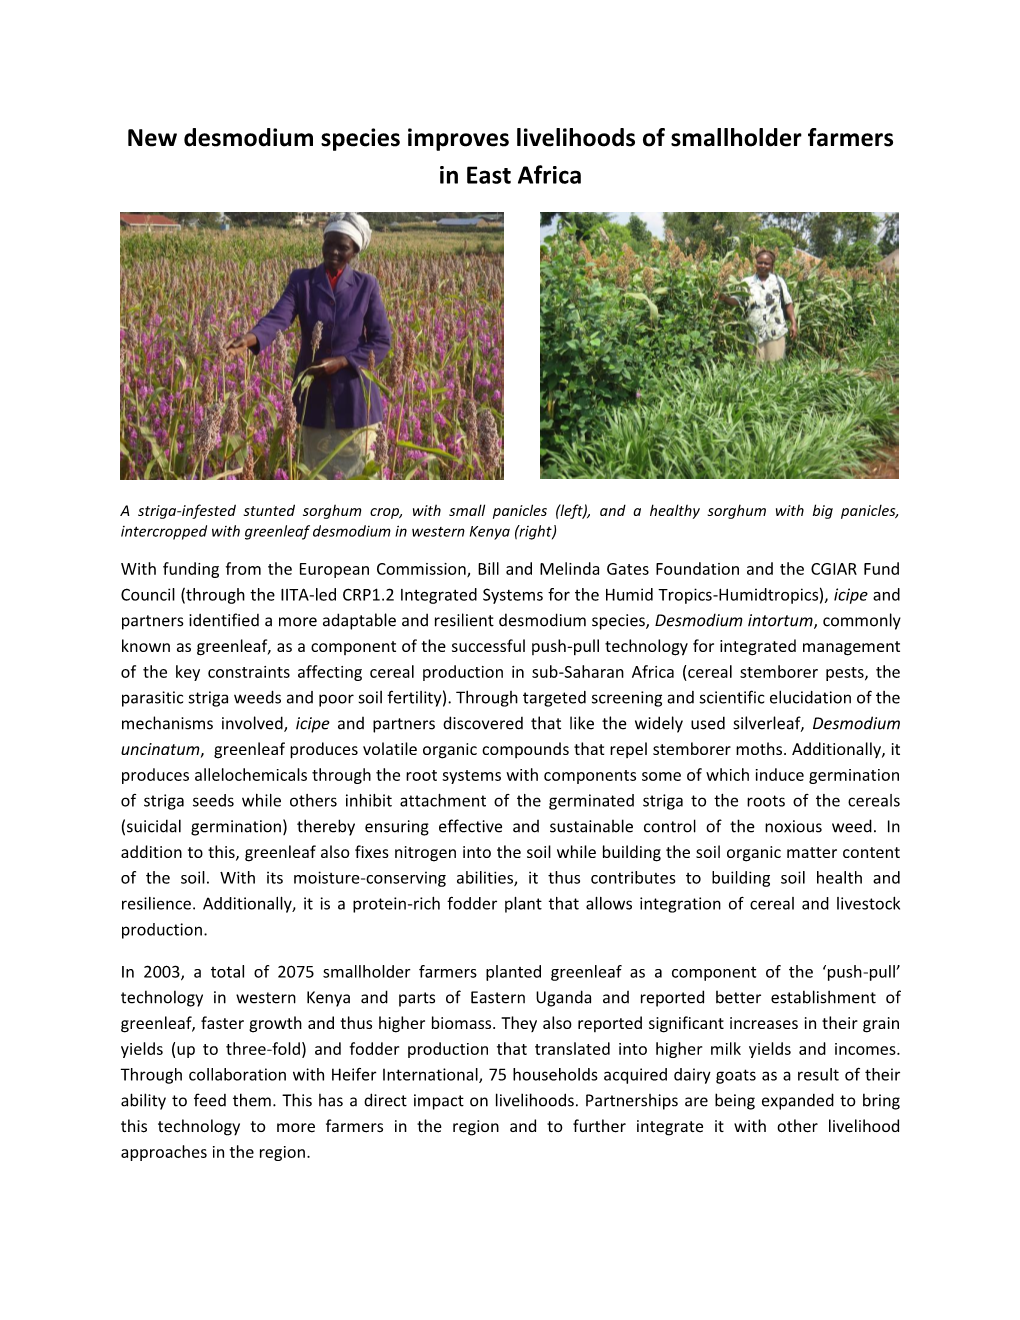 New Desmodium Species Improves Livelihoods of Smallholder Farmers in East Africa